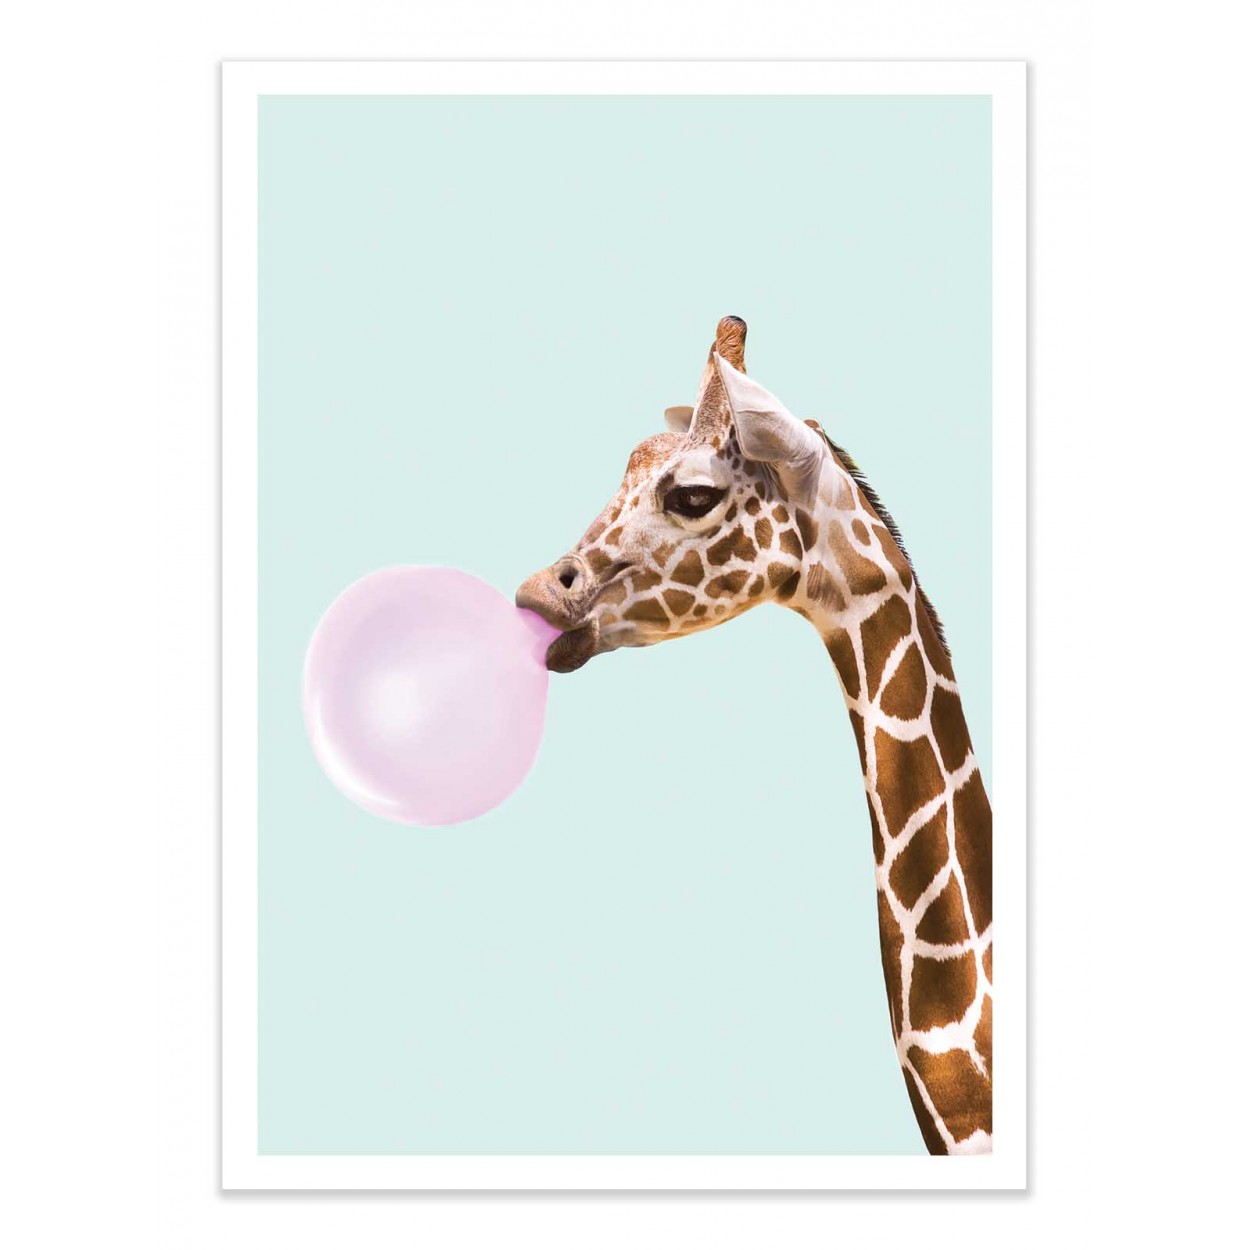 Art-Poster Pop art surrealist - Bubblegum Giraffe, by Paul Fuentes